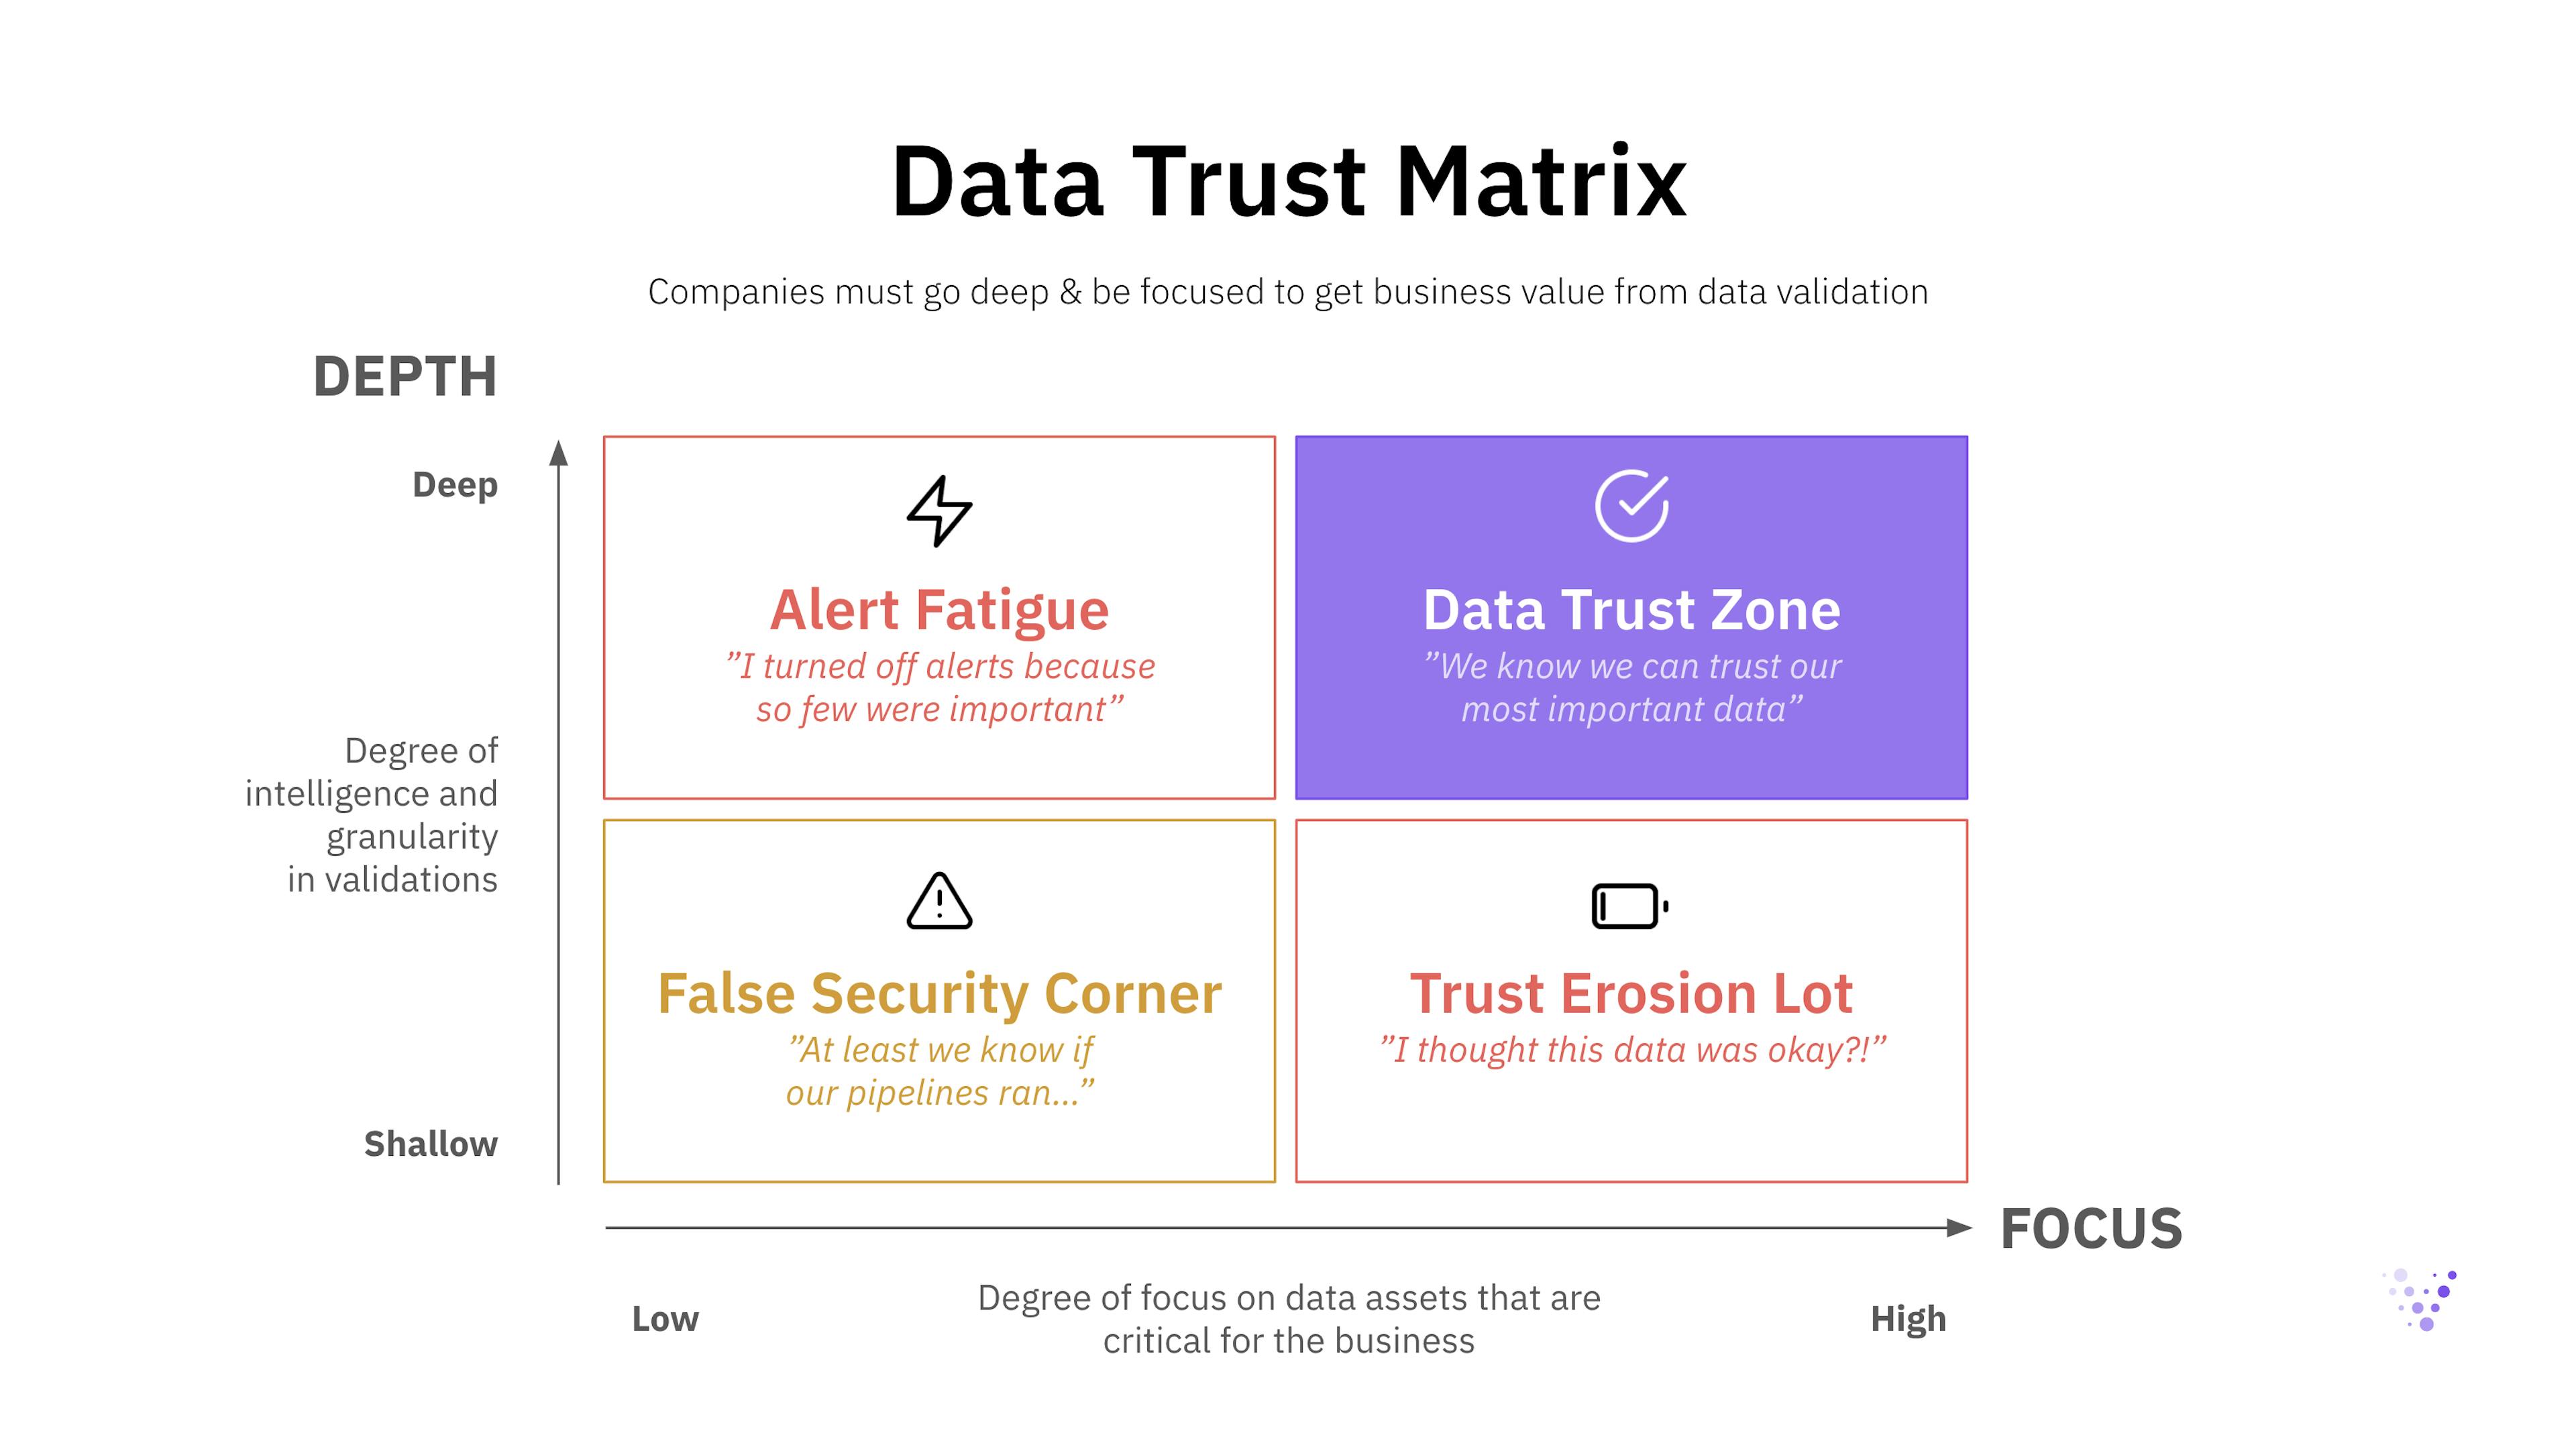 Data Trust Matrix: Alert Fatigue, False Security Corner, Trust Erosion Lot and Data Trust Zone